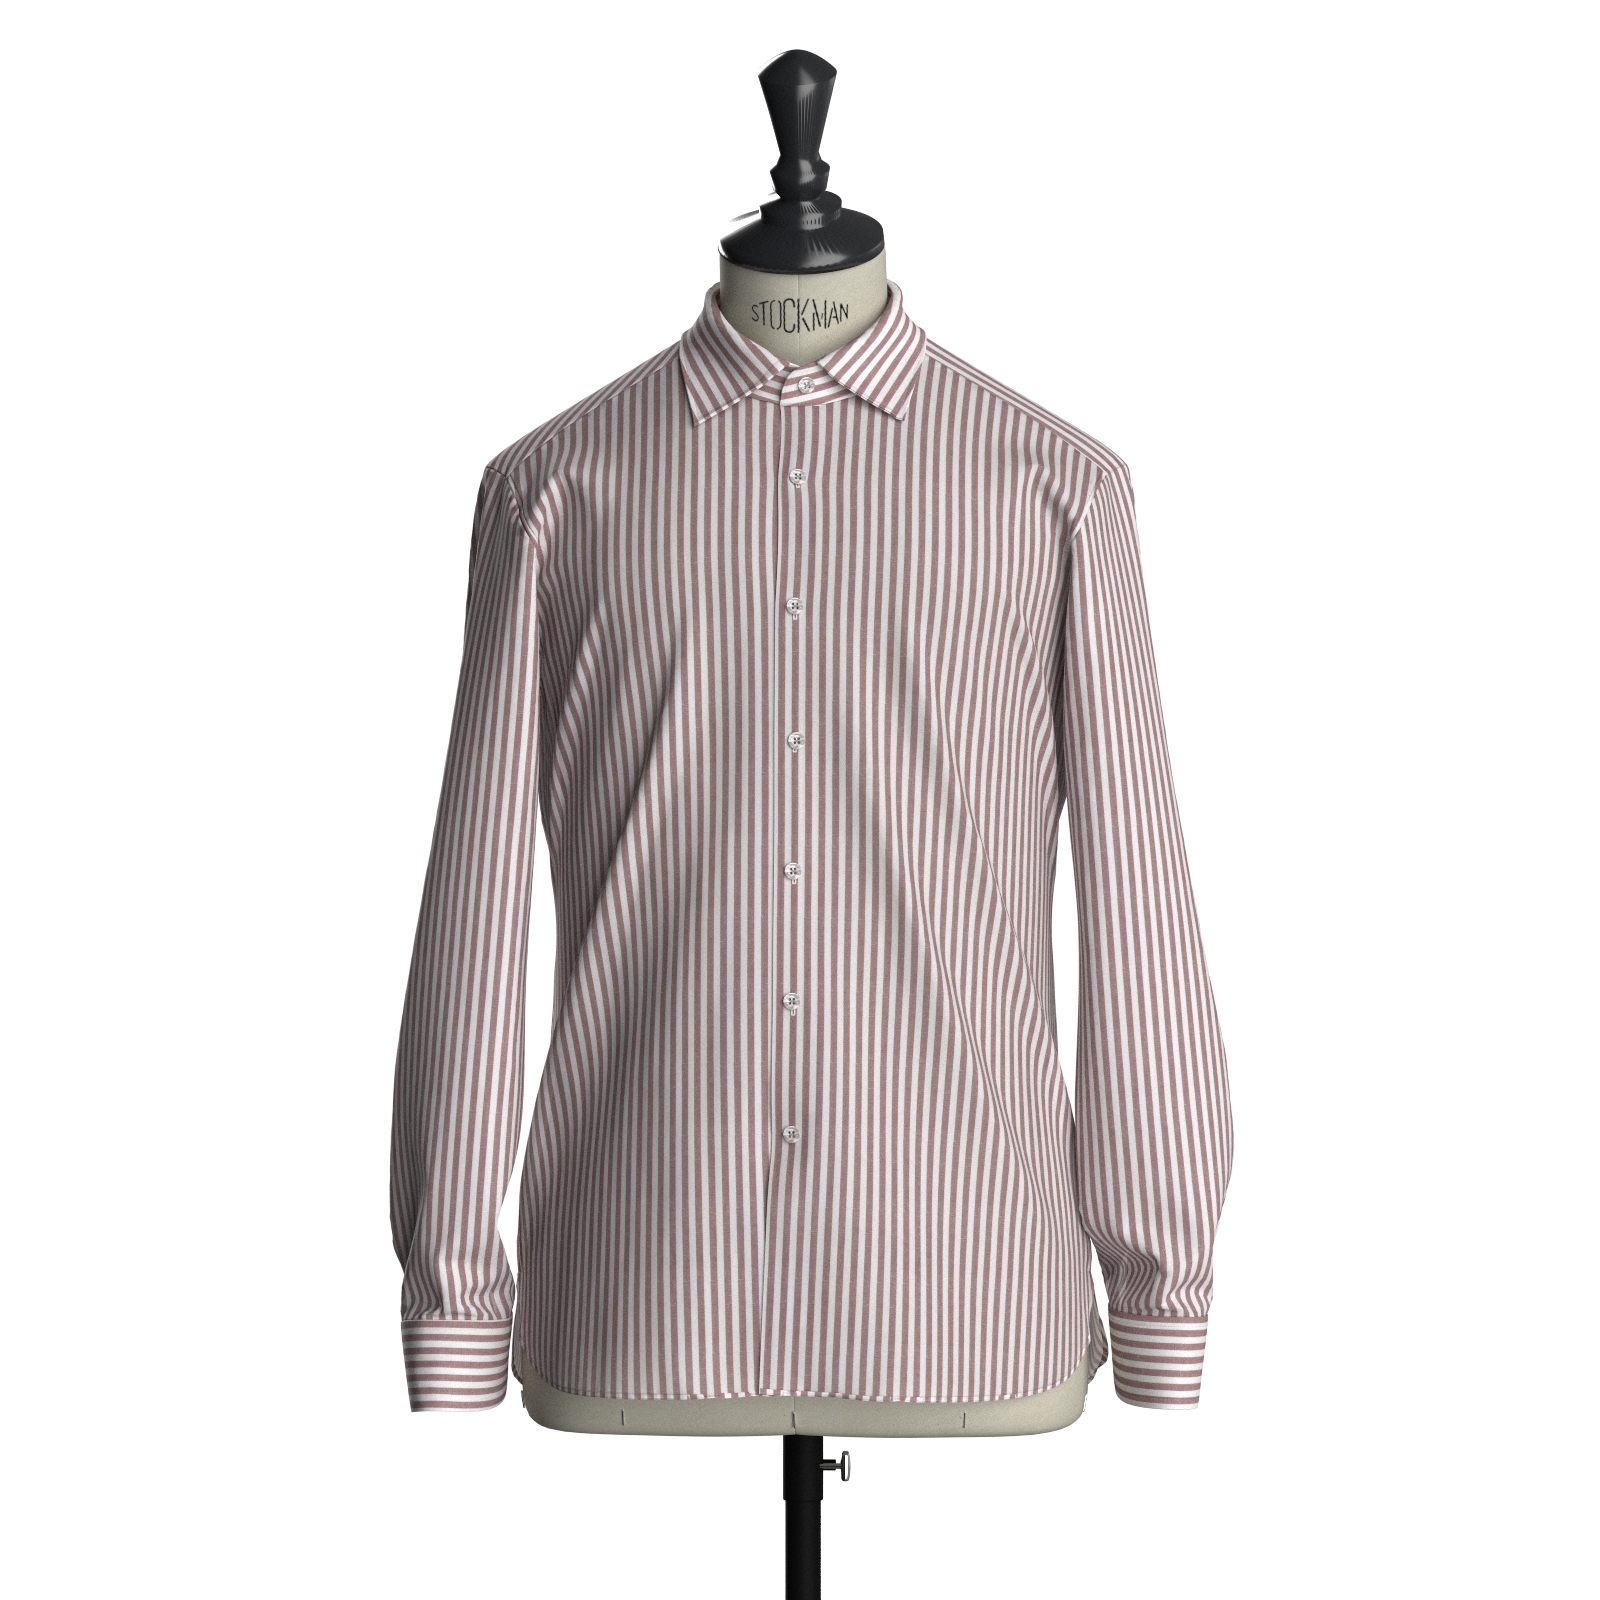 G&R Brown Stripe Cotton Linen(PN-Y95884)